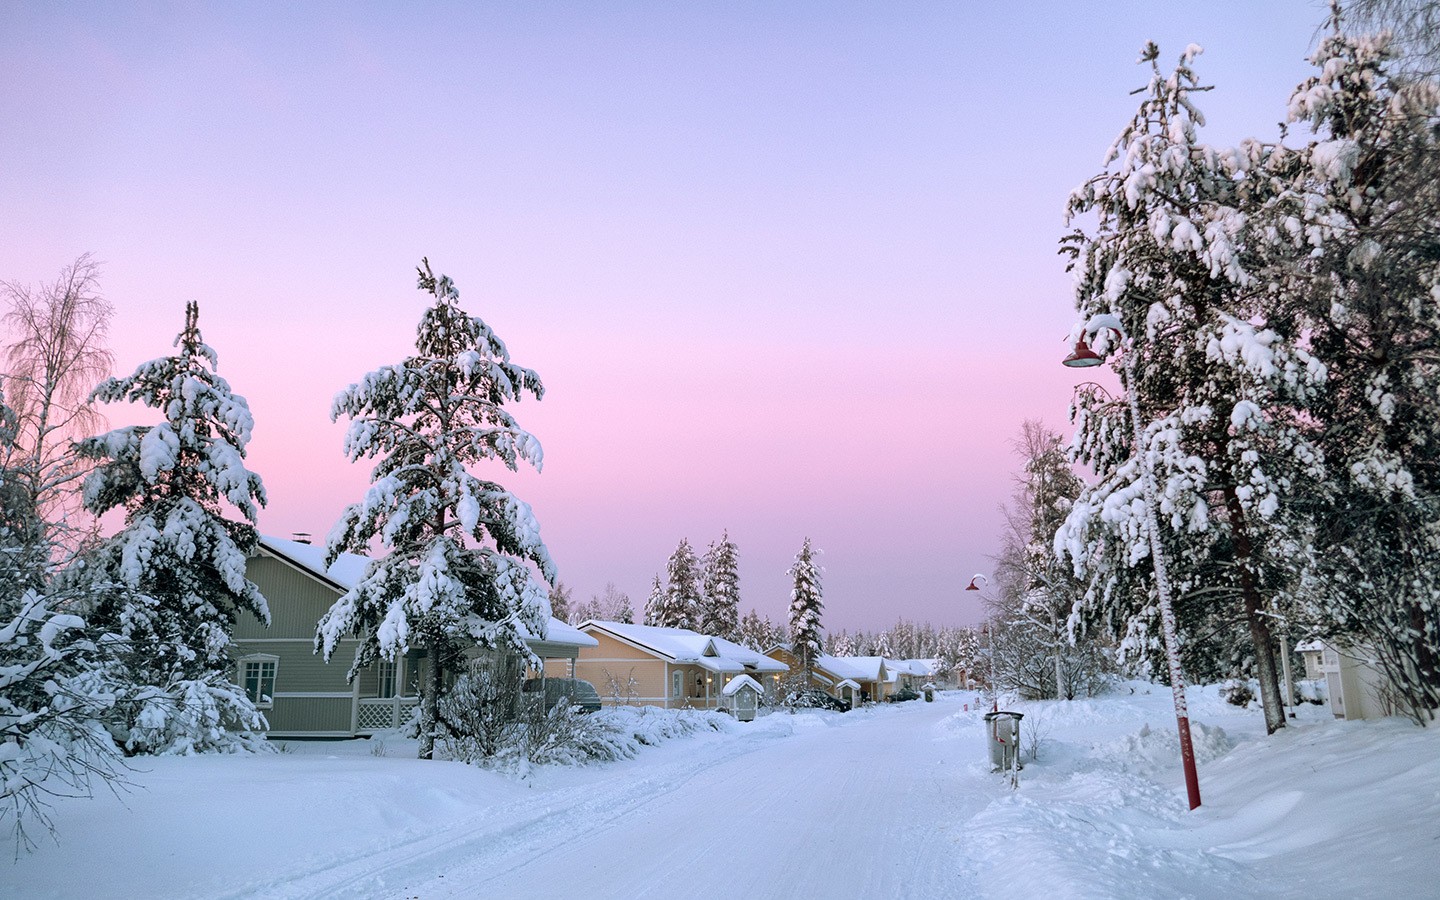 Sunrise in Rovaniemi, Finland